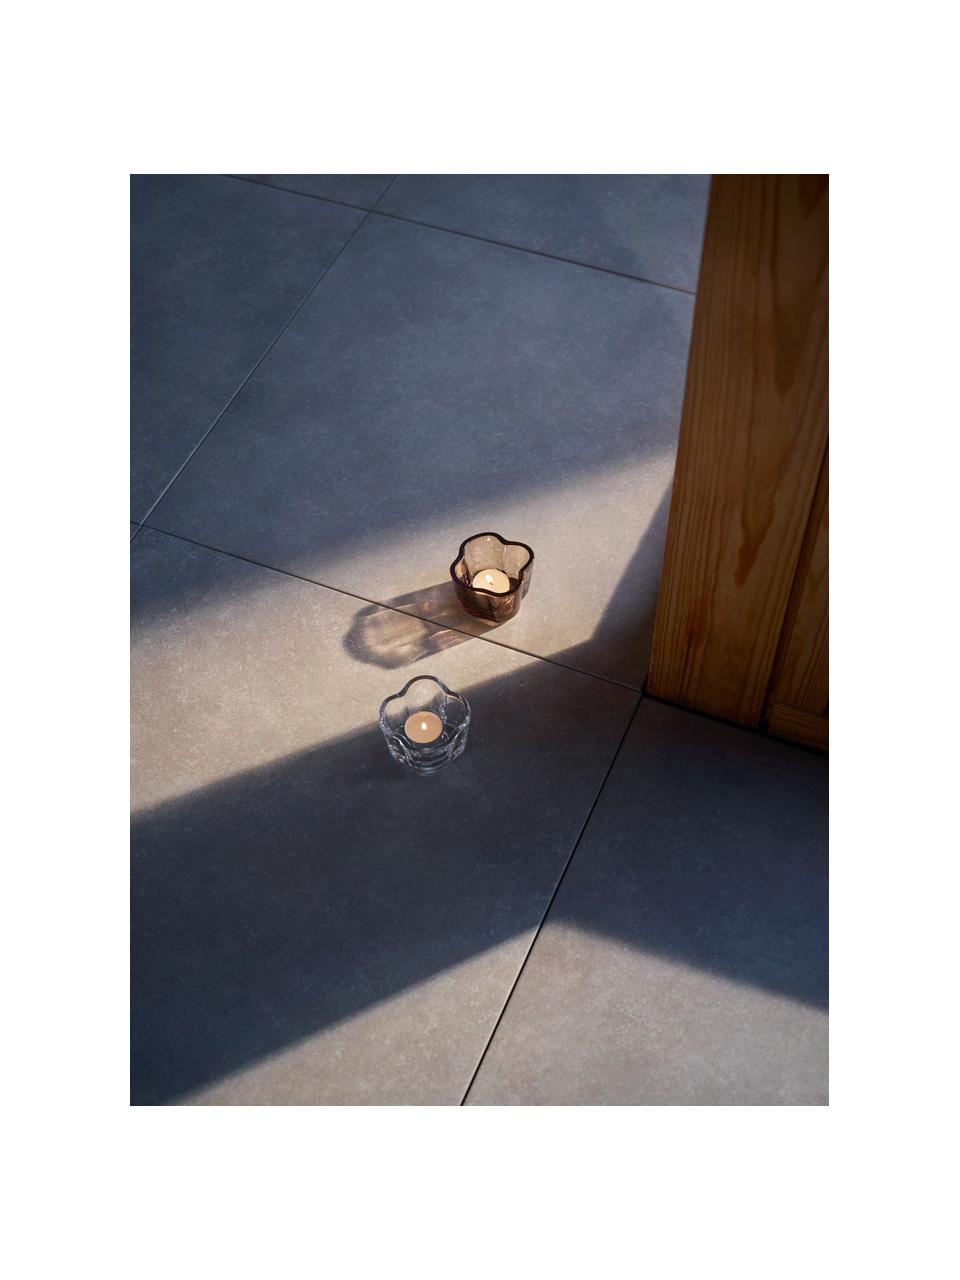 Waxinelichthouder Alvar Aalto, Glas, Greige, transparant, Ø 9 x H 6 cm